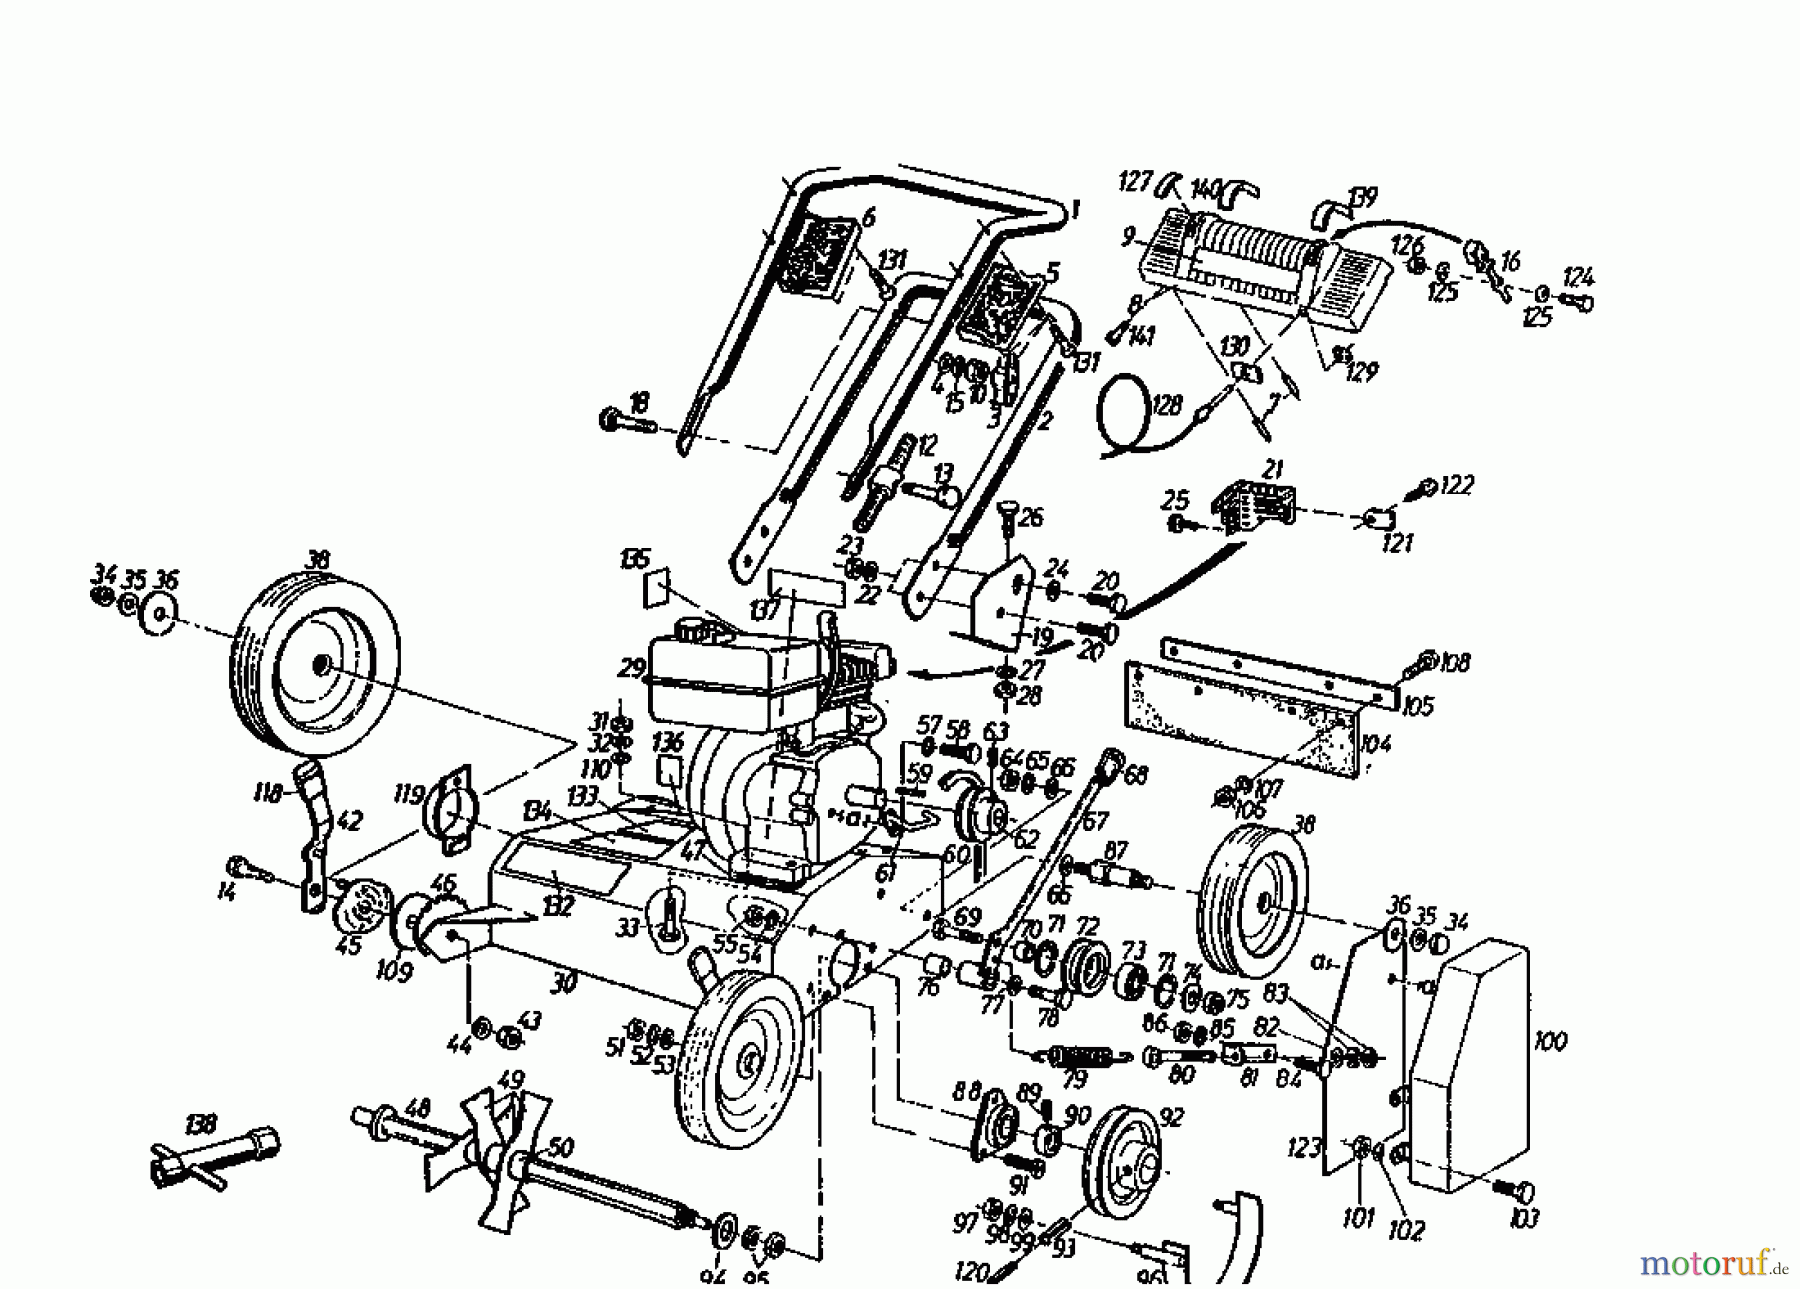  Gutbrod Petrol verticutter MV 504 00053.03  (1993) Basic machine